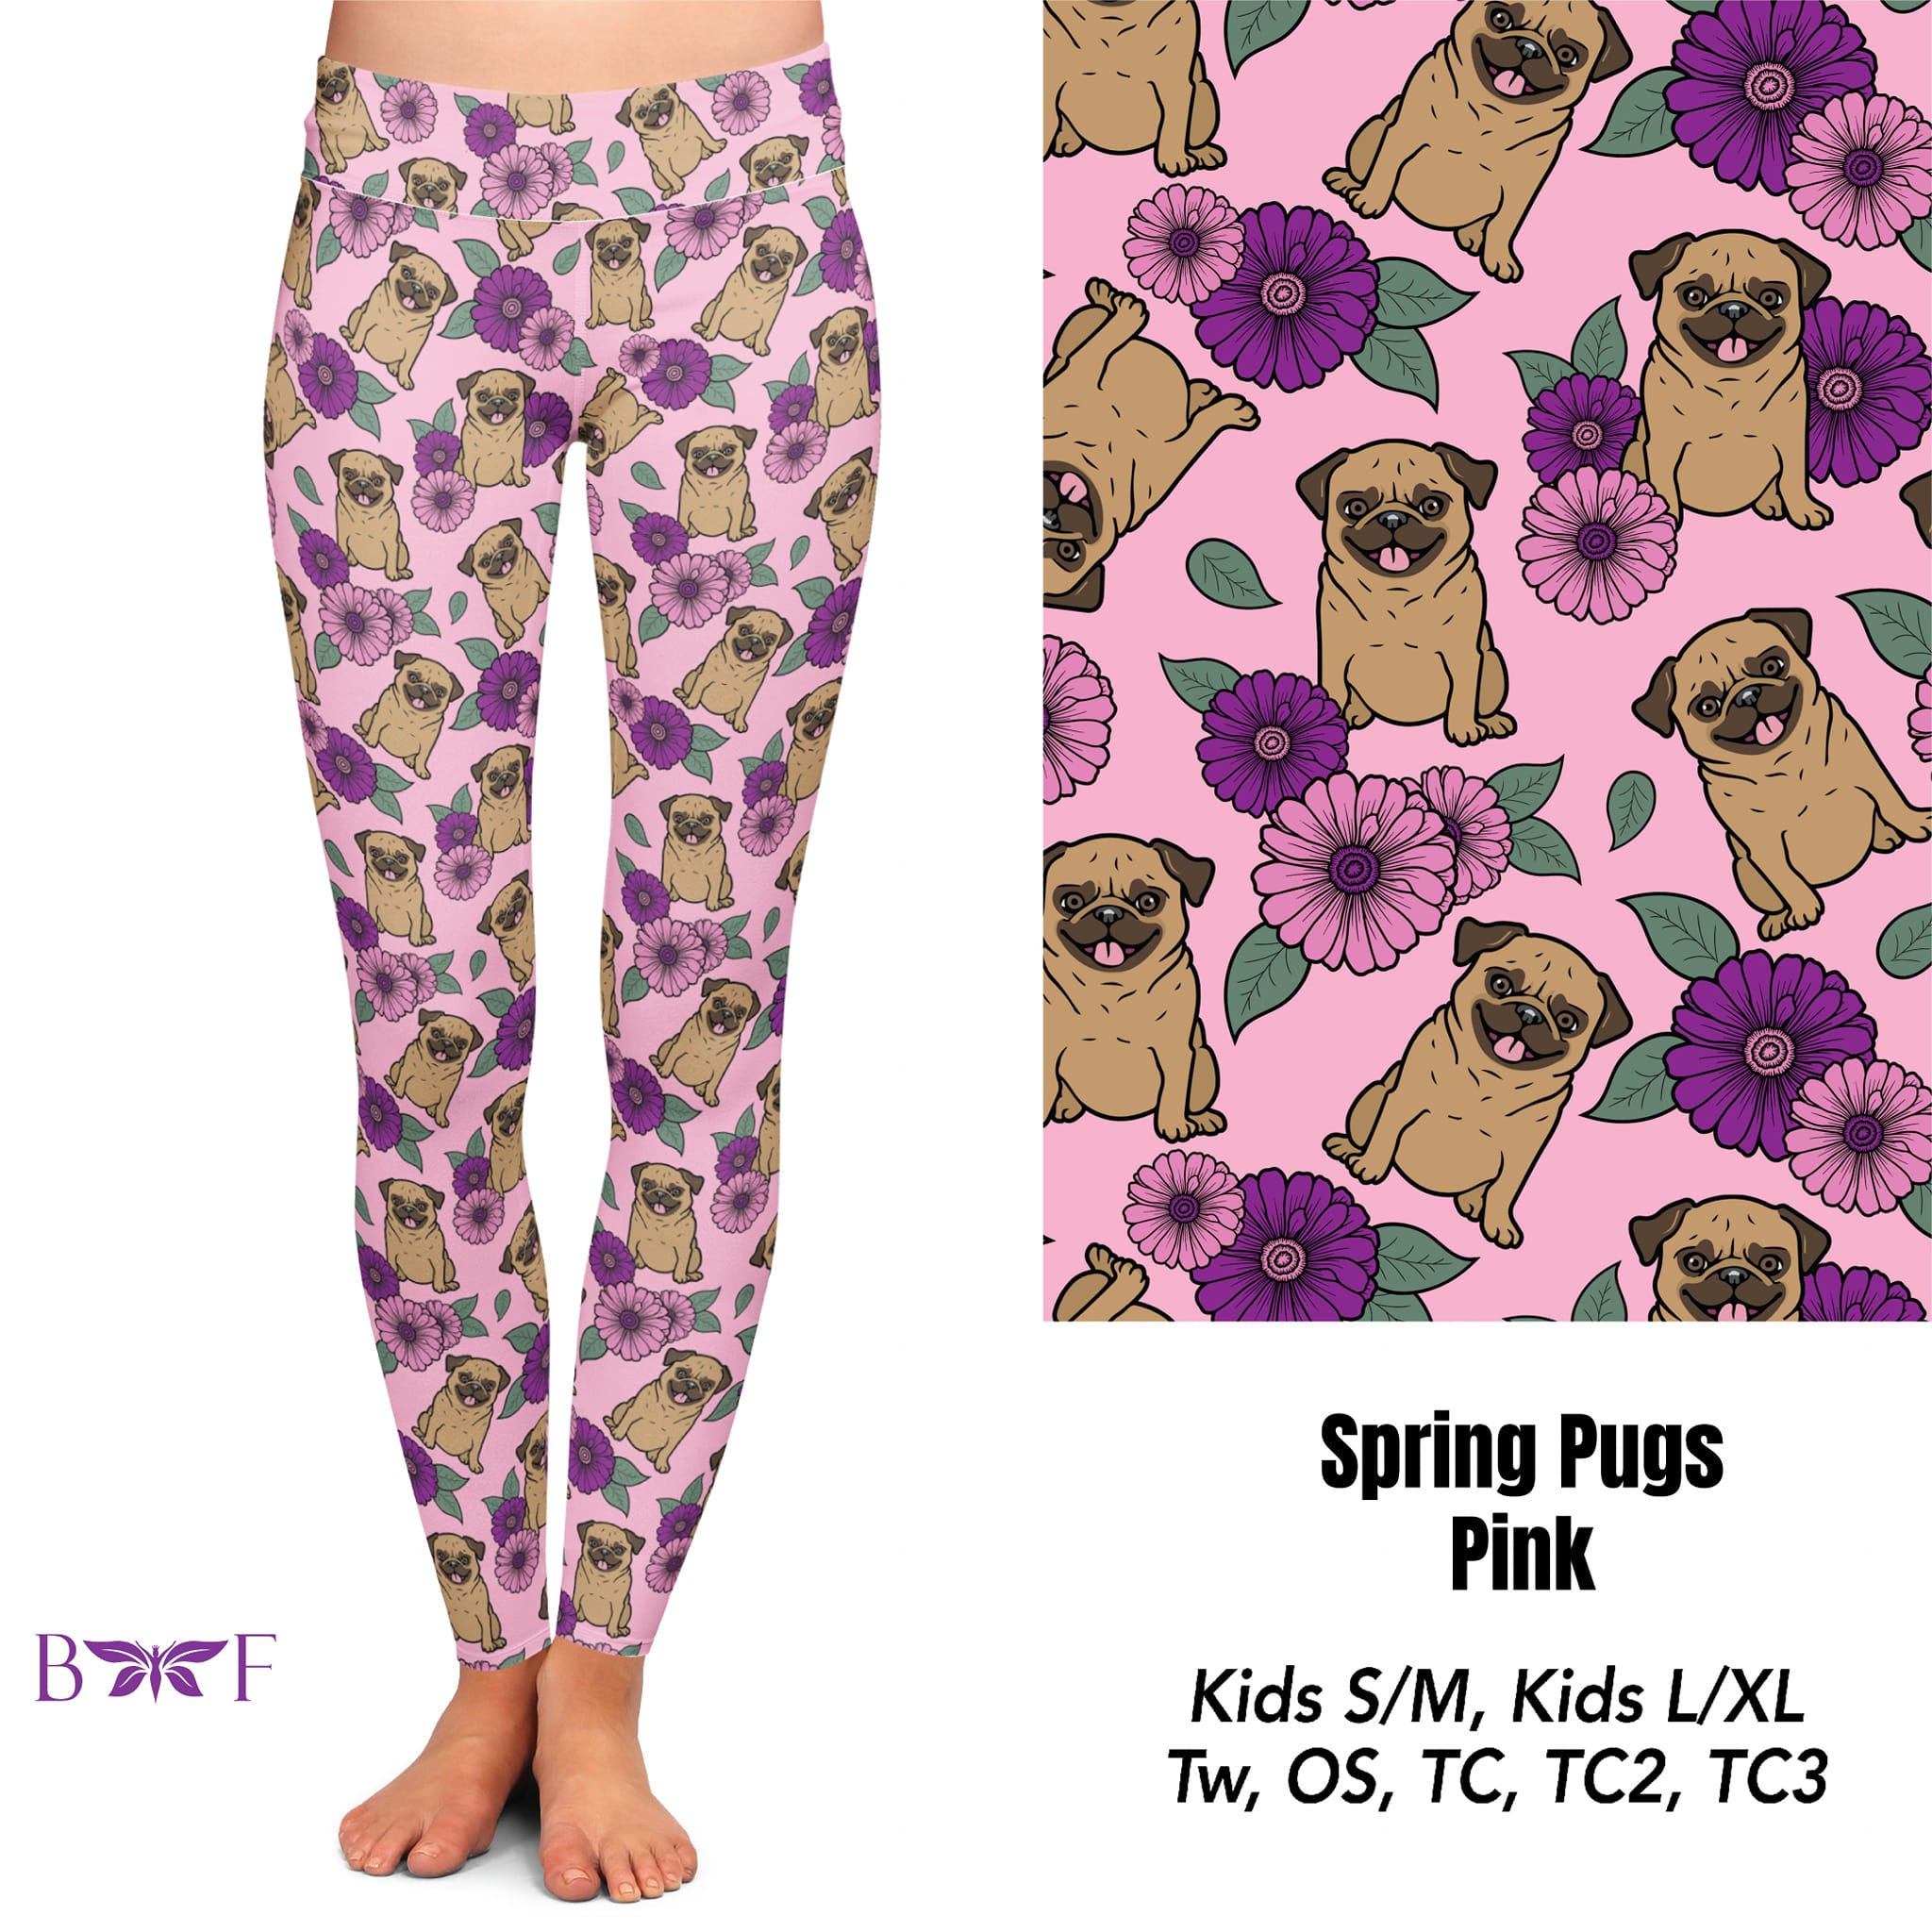 Spring Pugs Pink Leggings